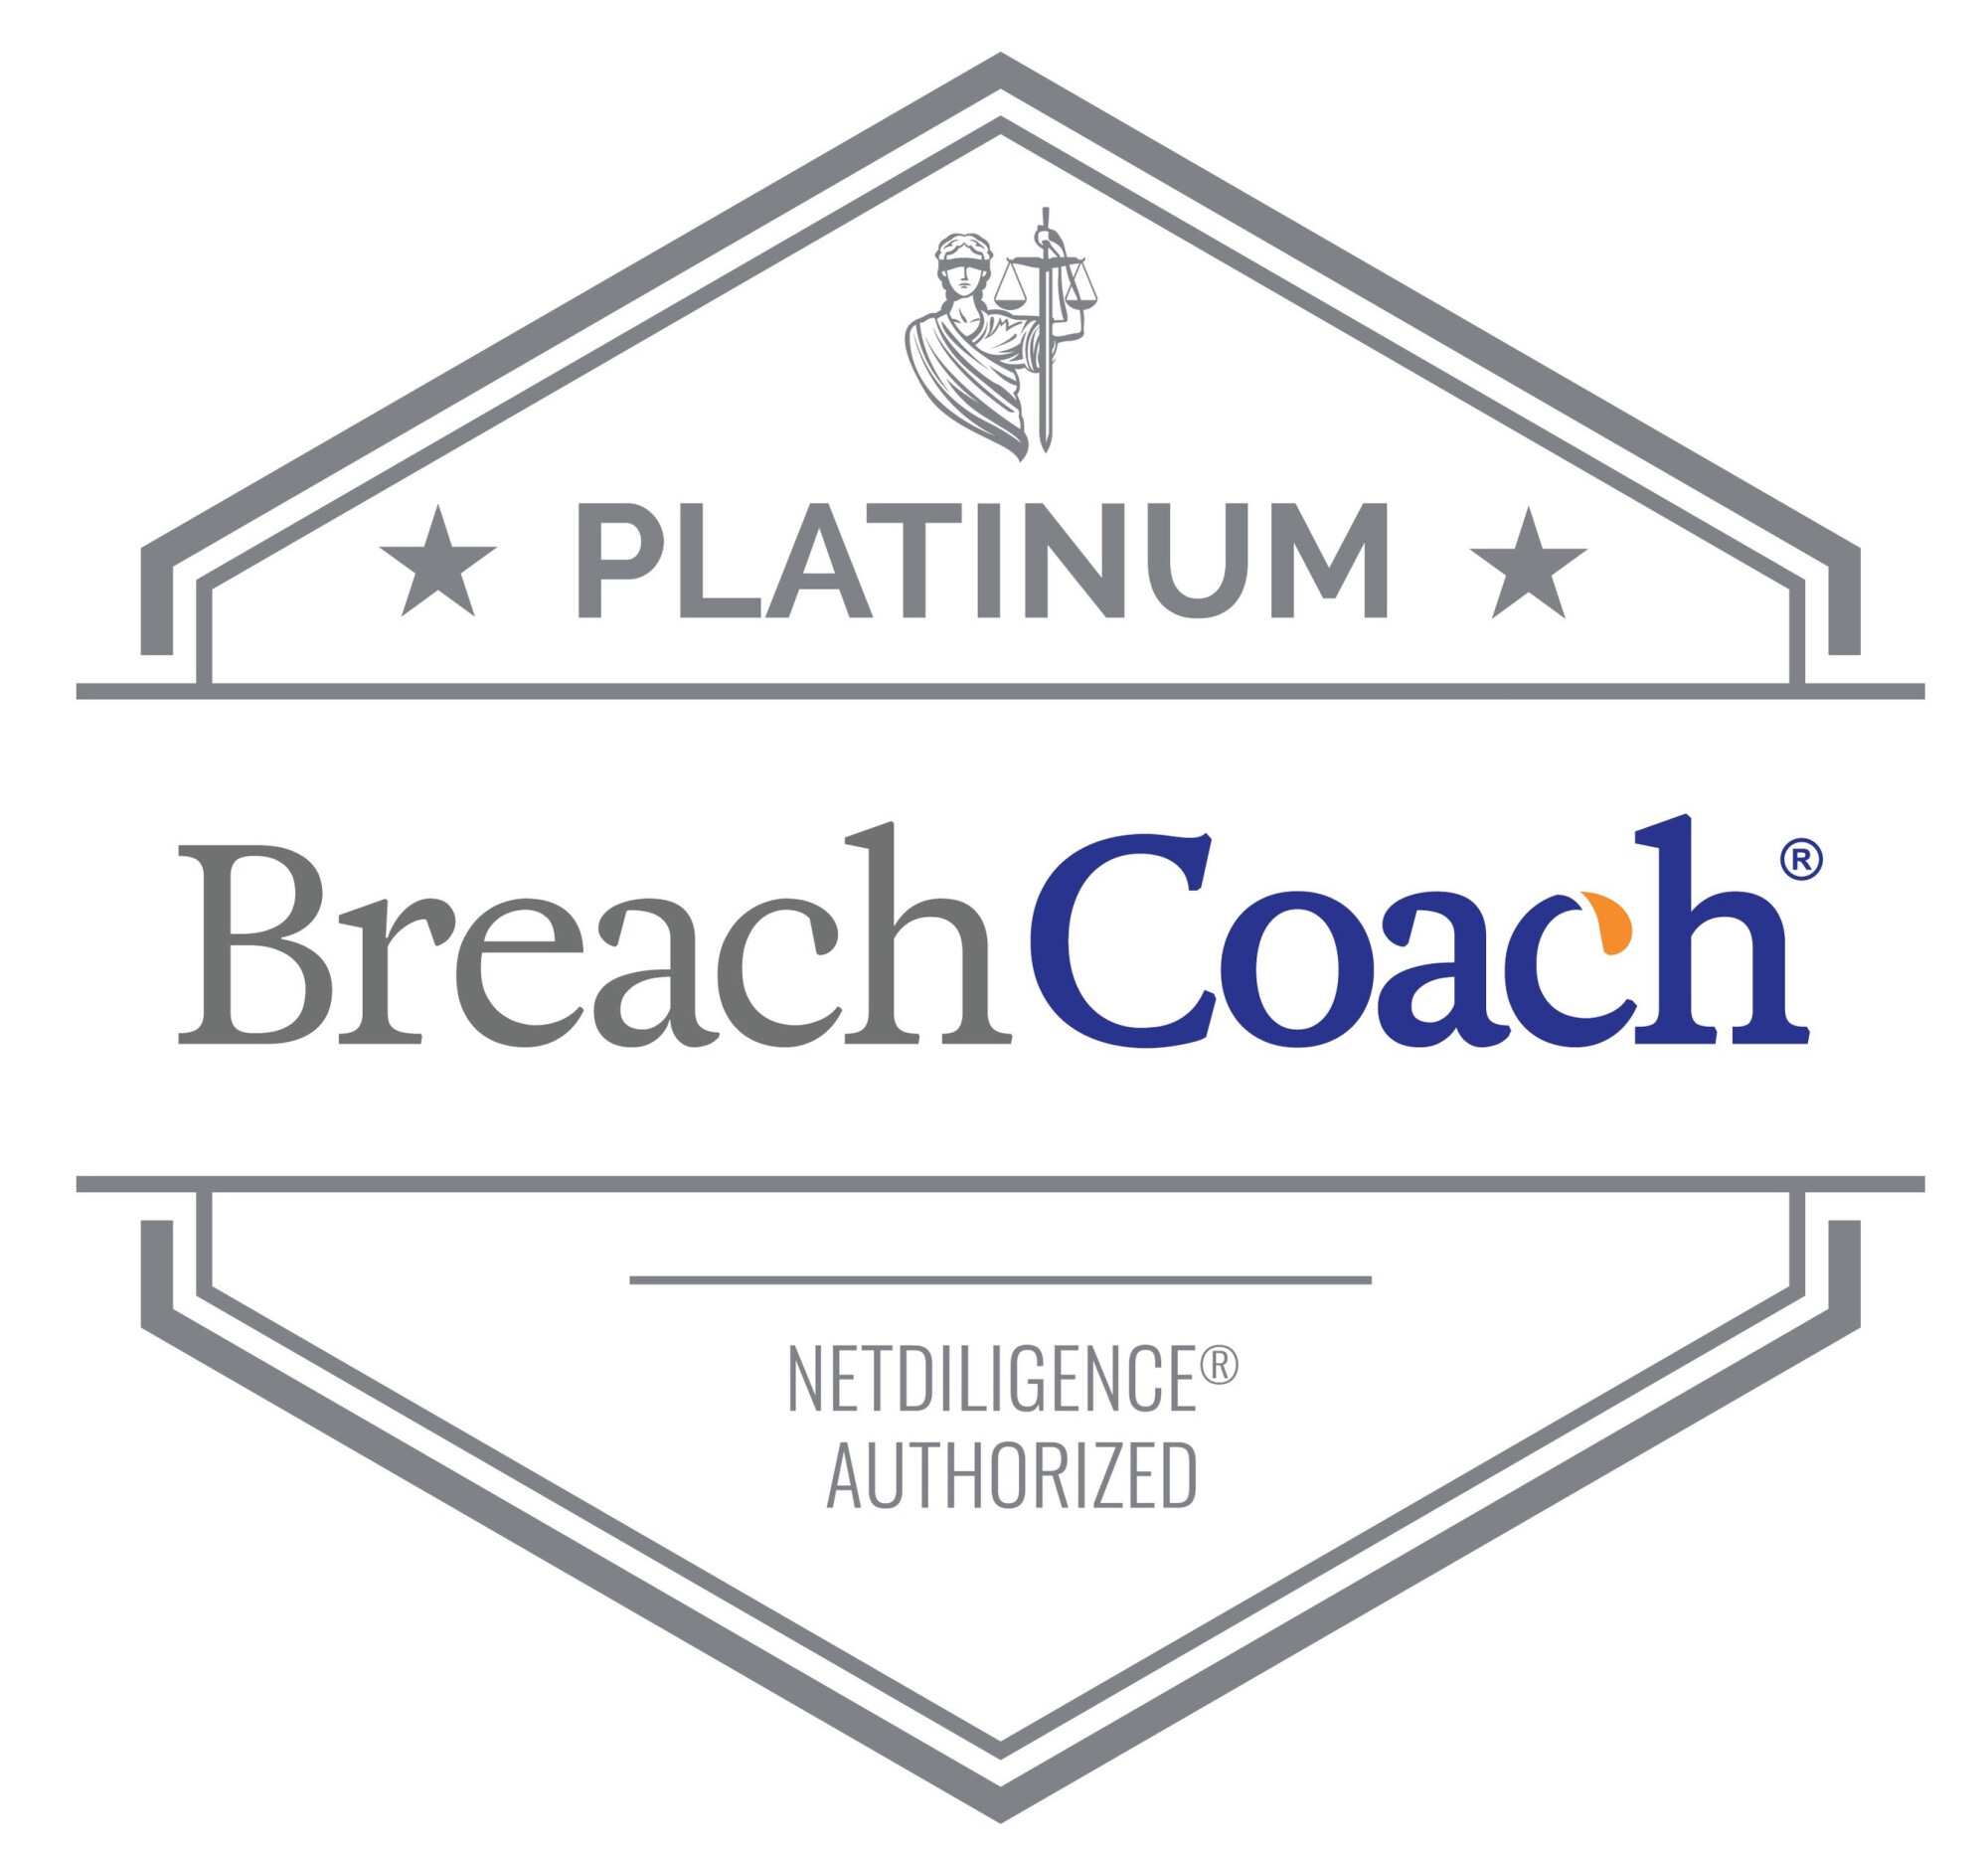 NetDiligence Platinum Breach Coach Seal